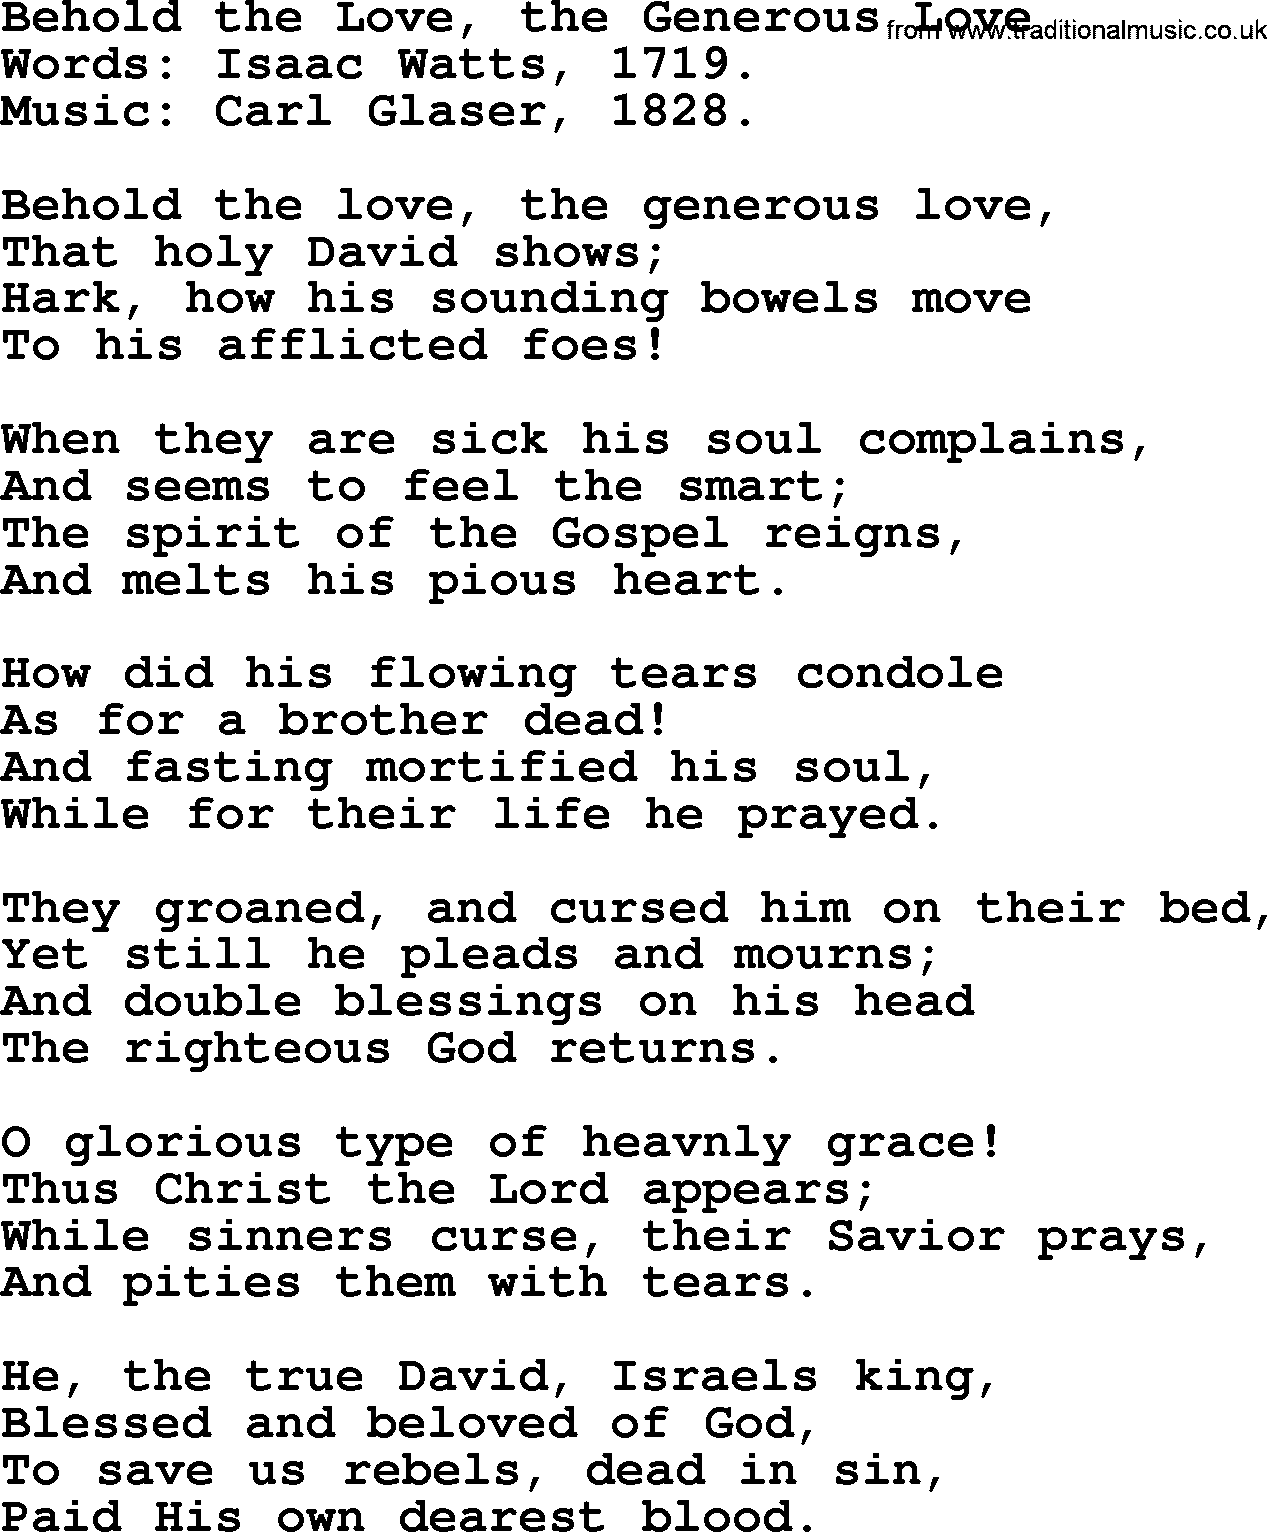 Isaac Watts Christian hymn: Behold the Love, the Generous Love- lyricss